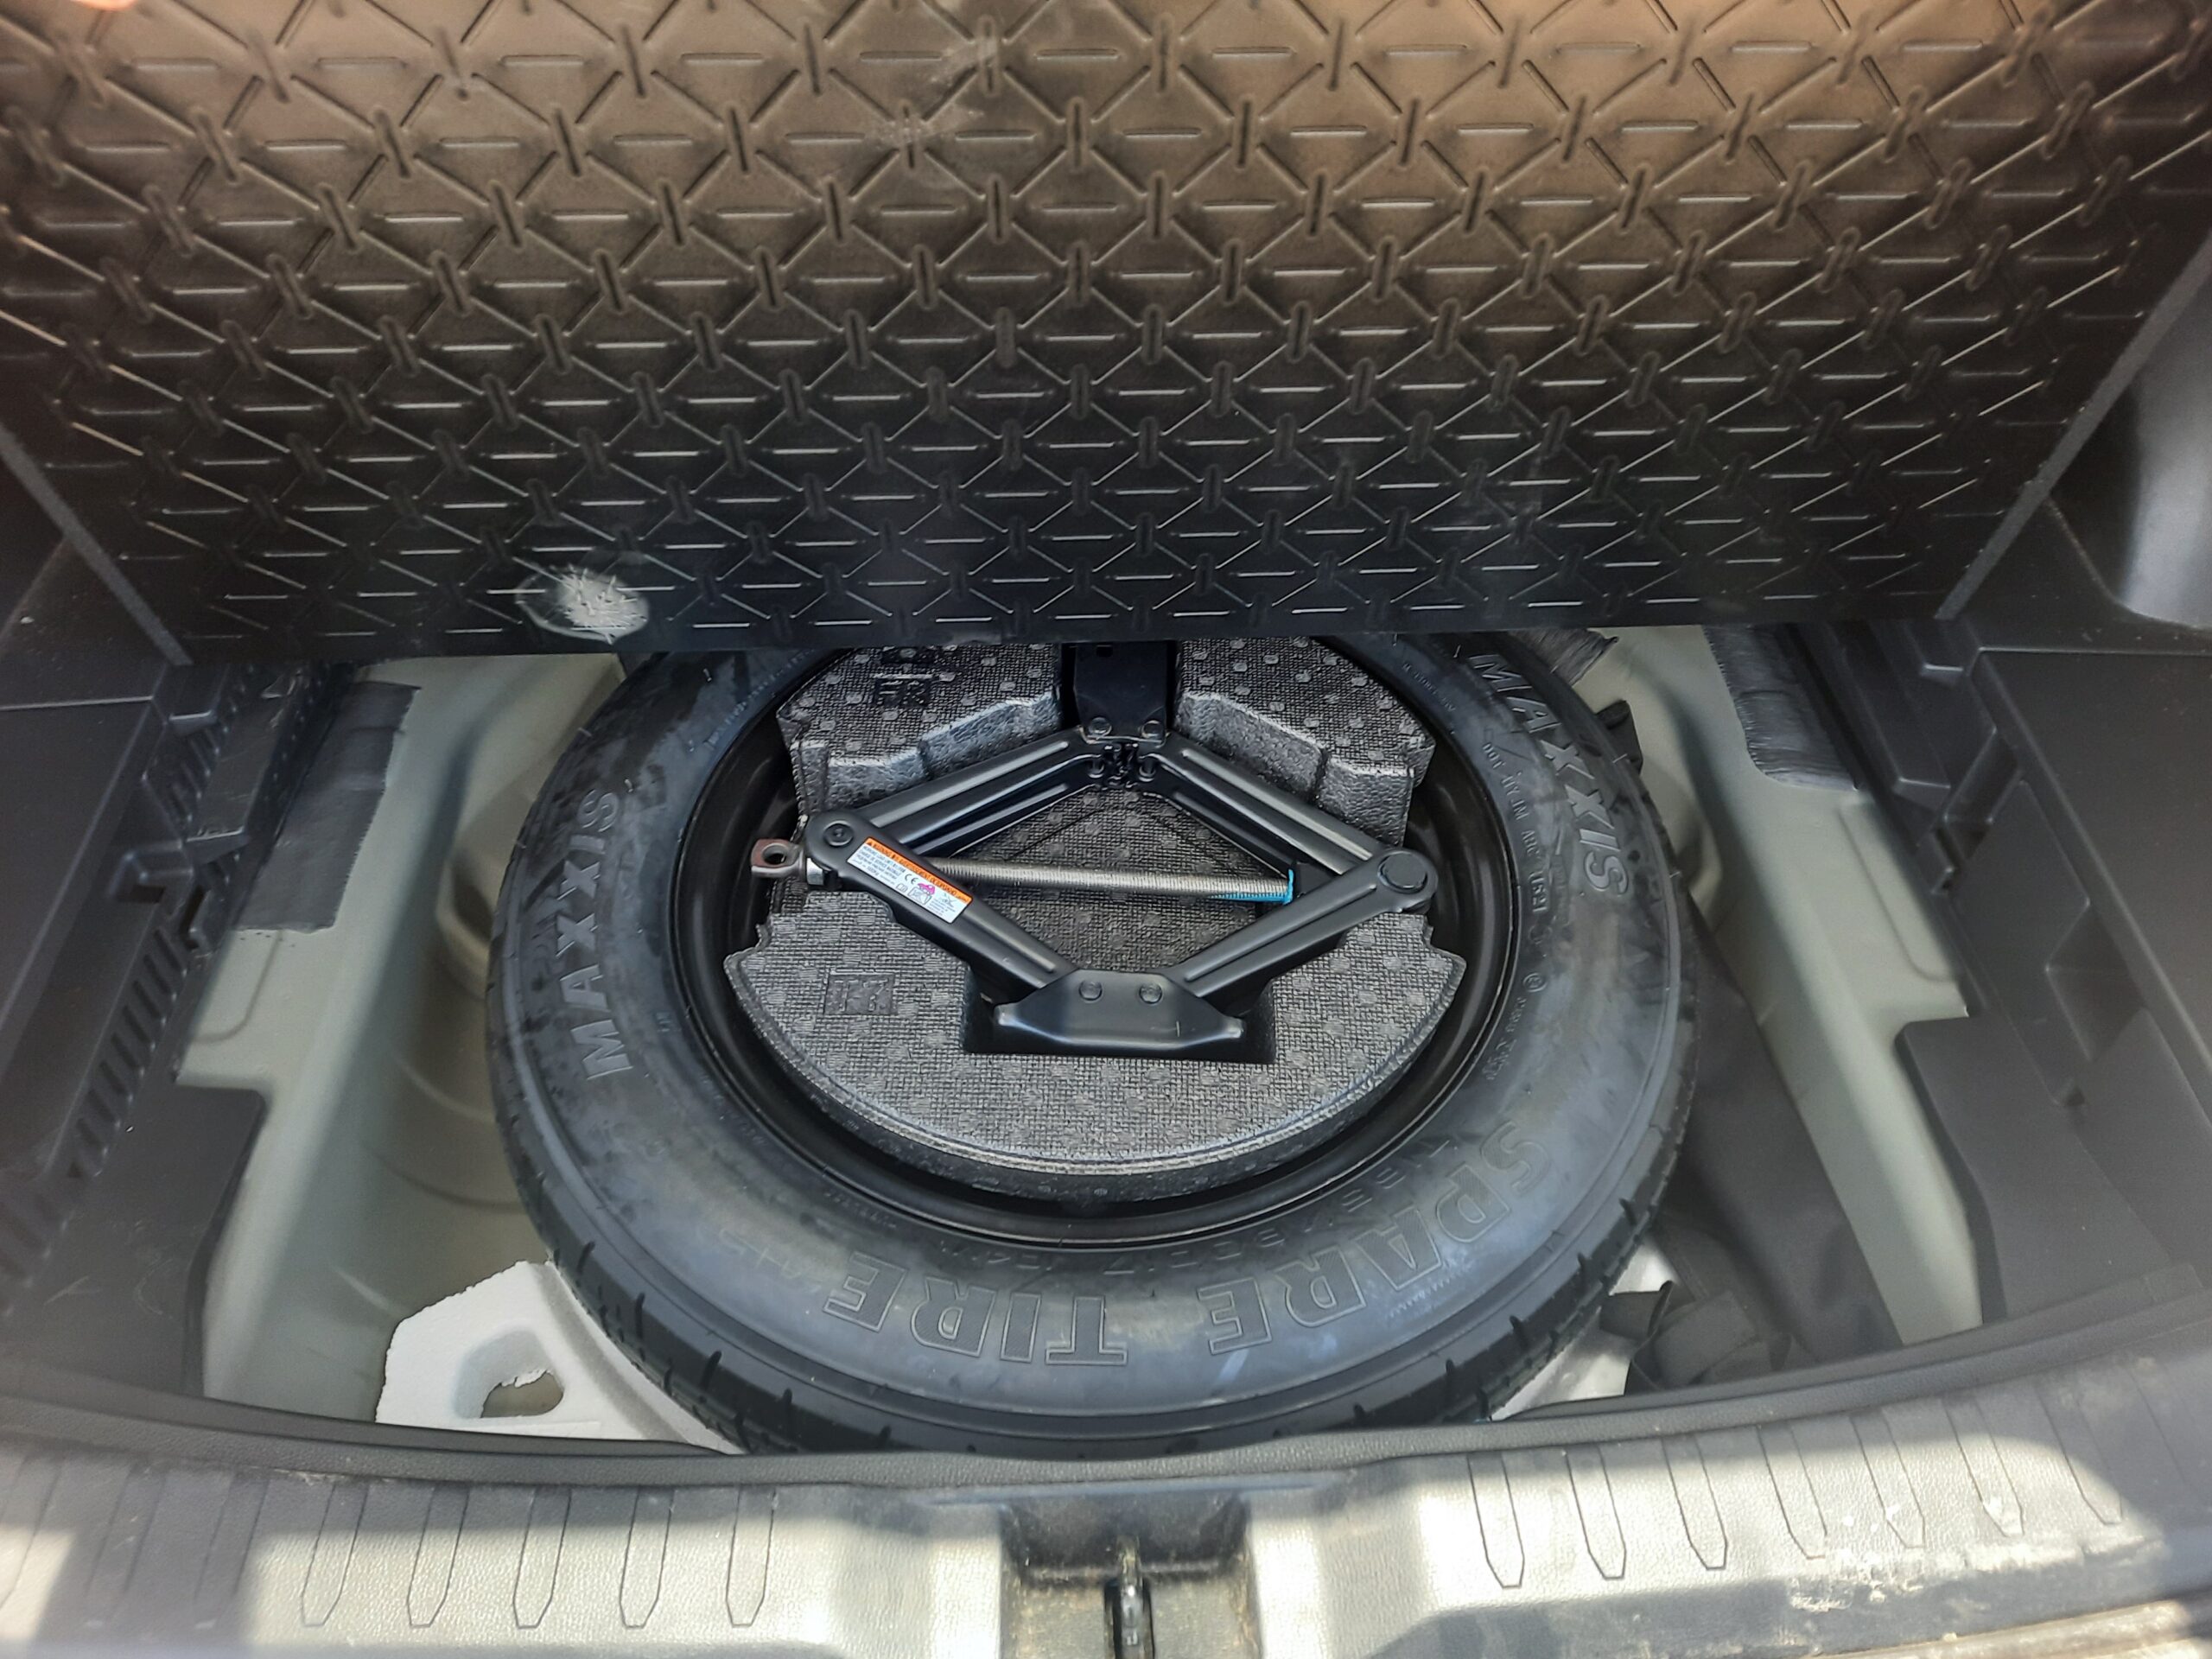 rav4 spare tire under rear cargo area